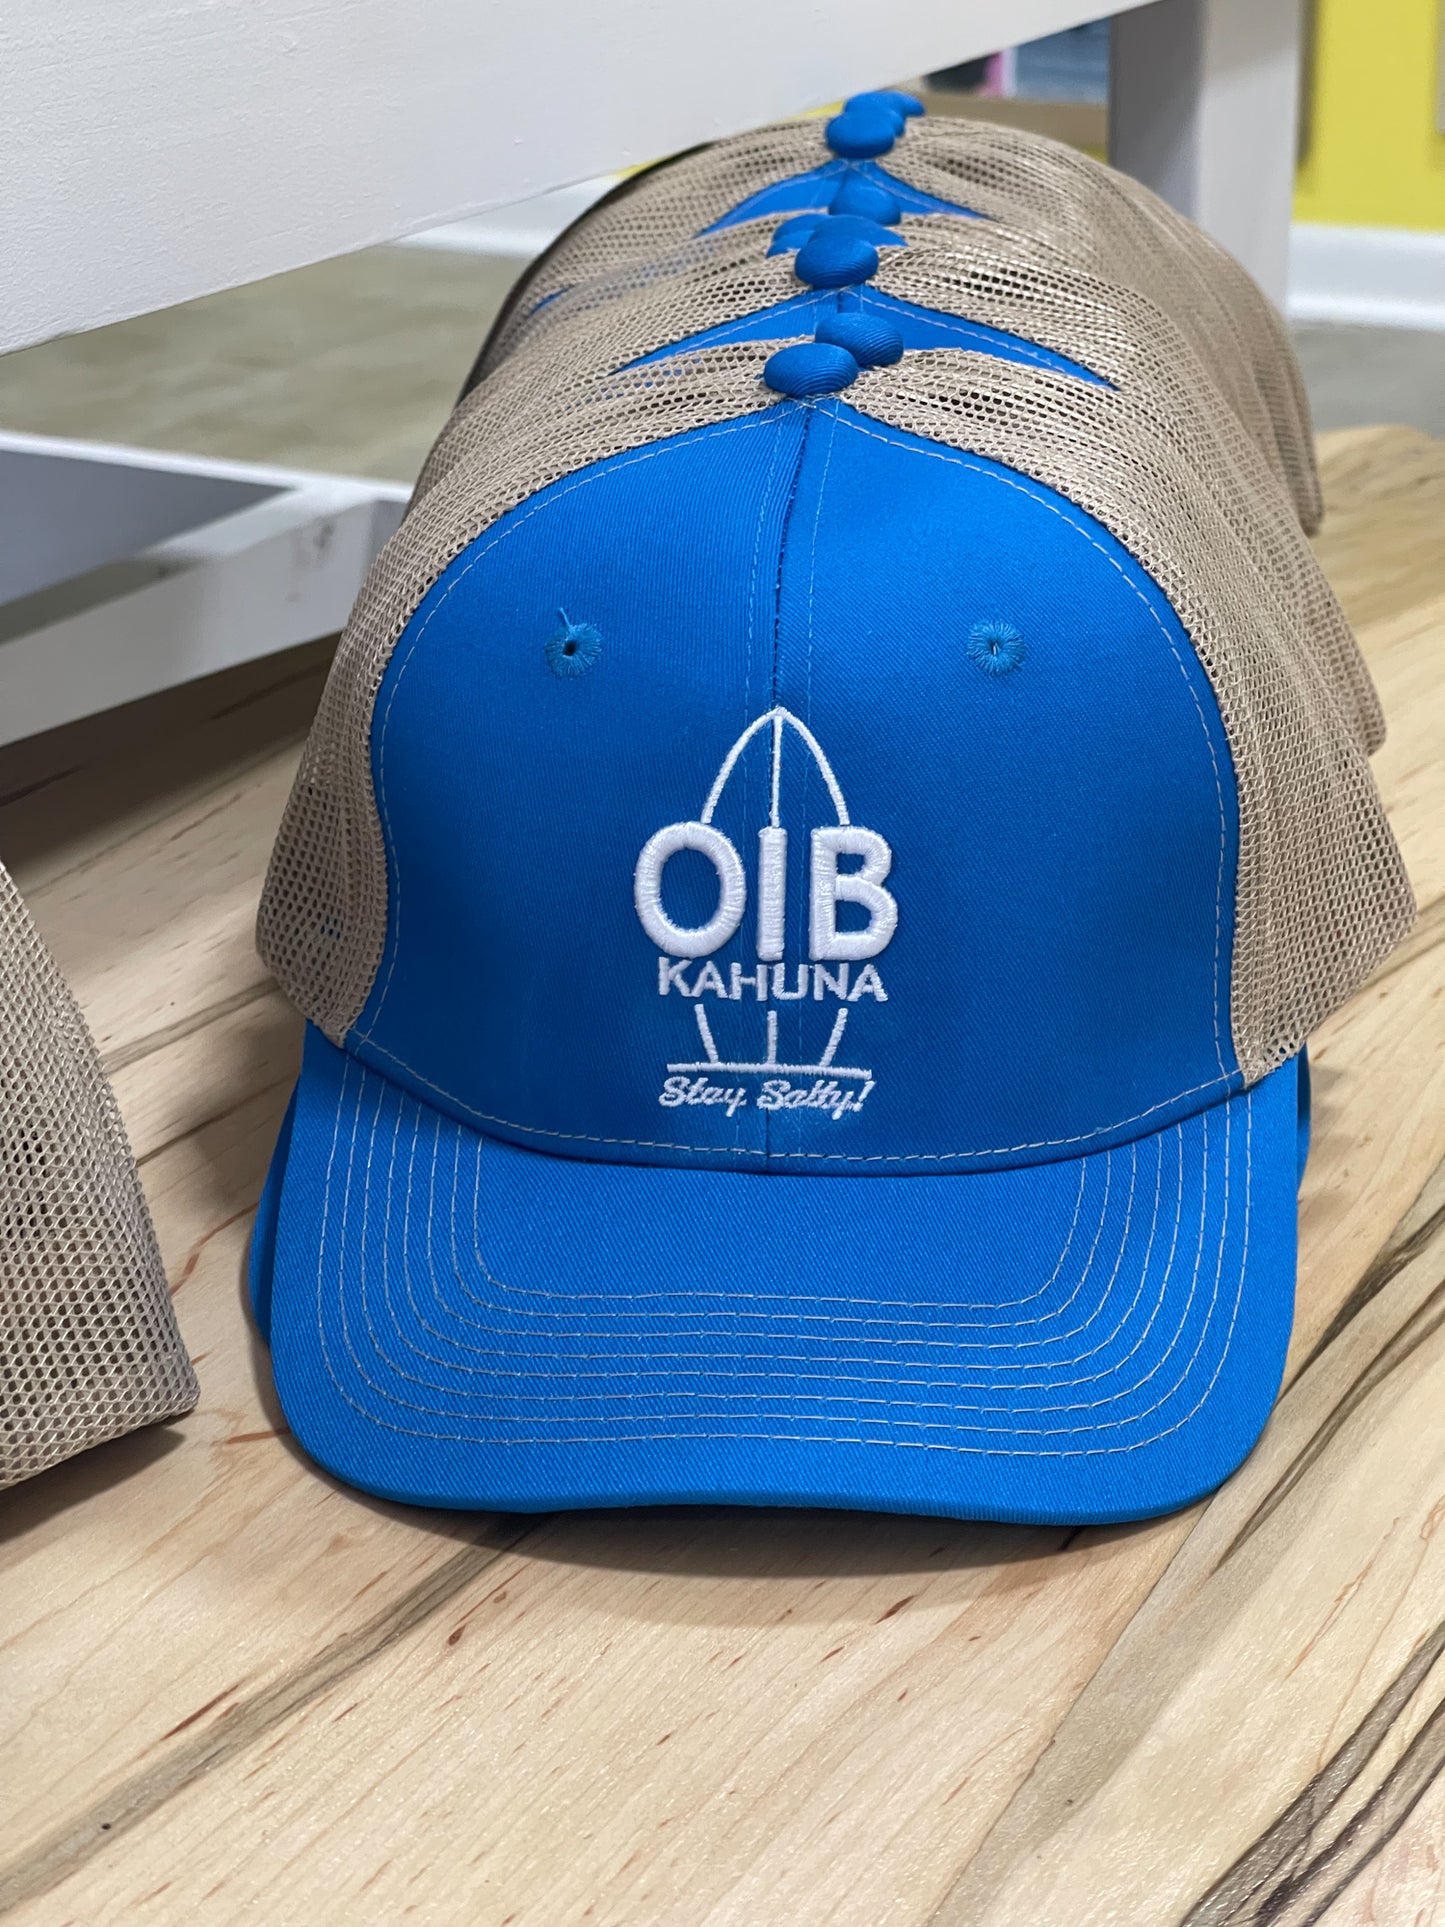 OIB Kahuna Surfboard Logo Trucker Hat